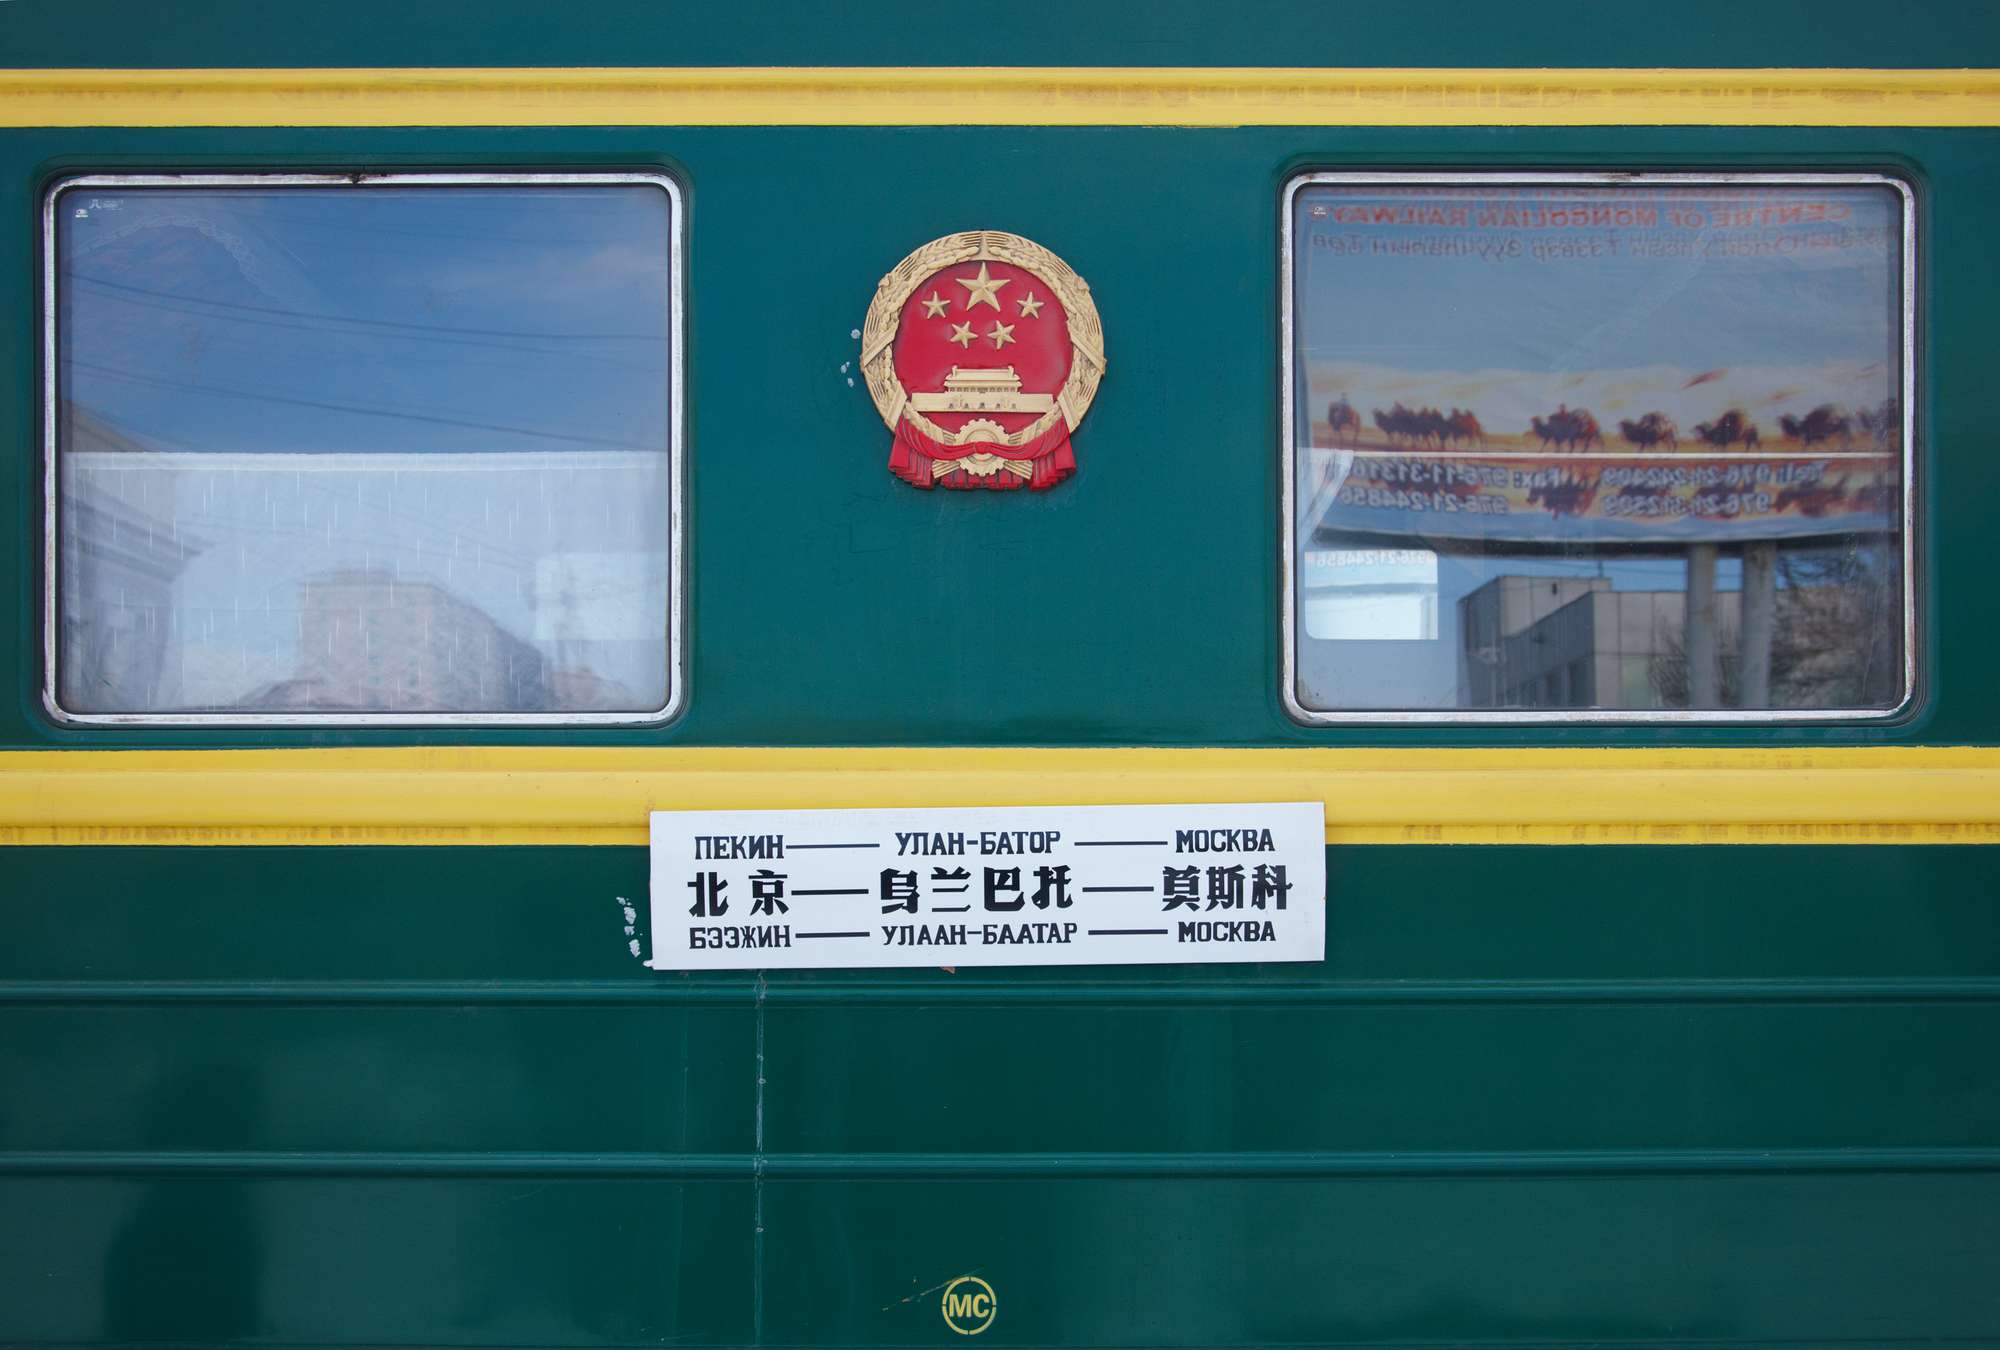             Wagon green - photo wallpaper railroad nostalgia
        